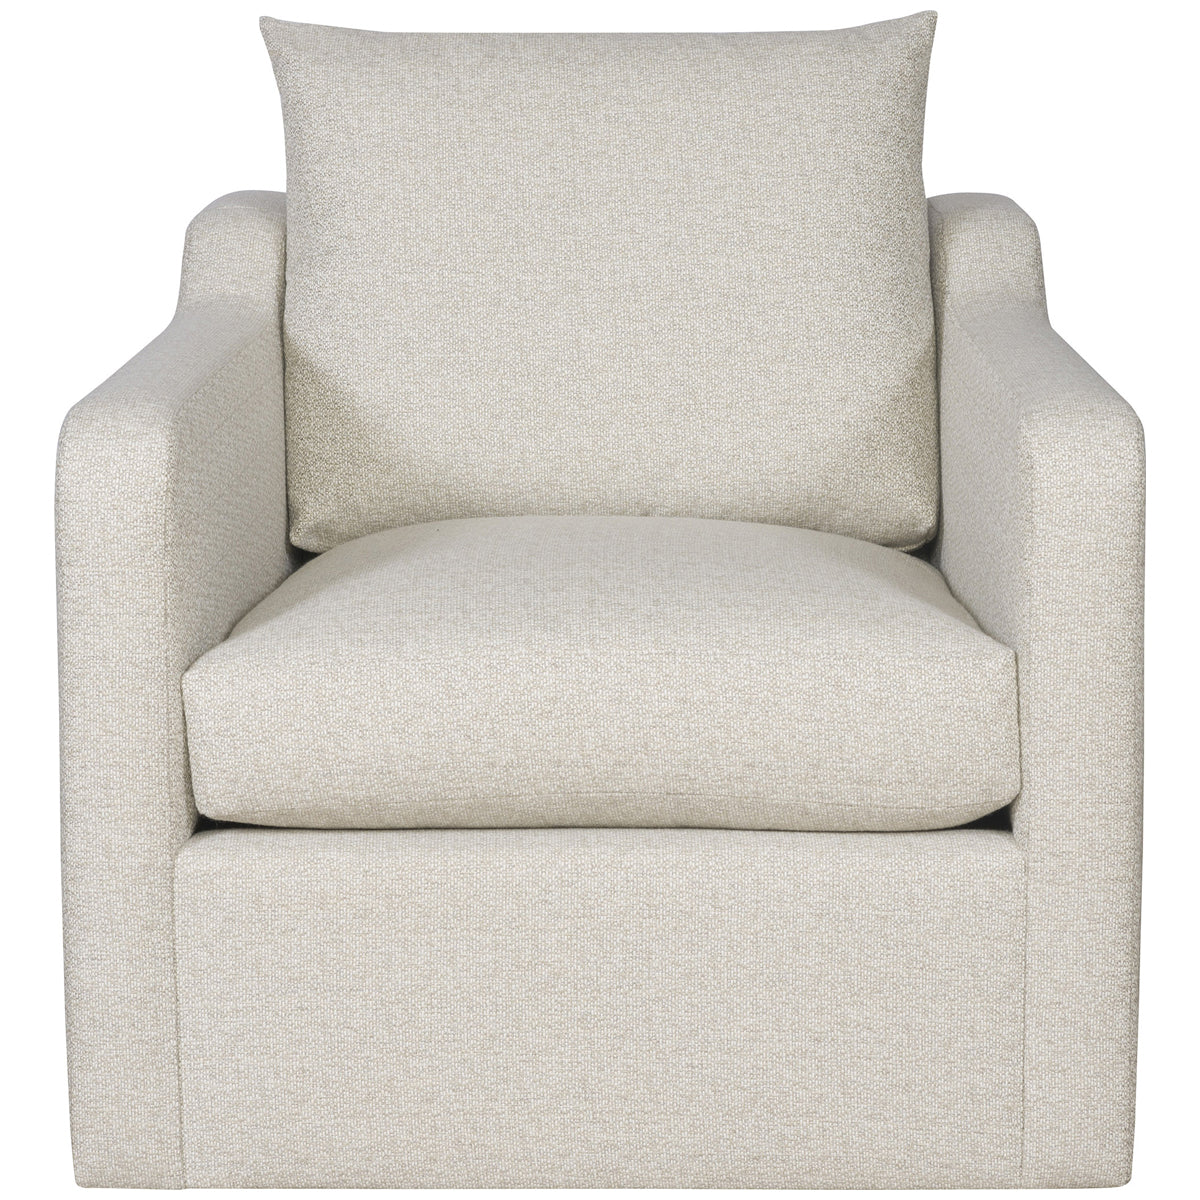 Vanguard Furniture Thea Swivel Chair